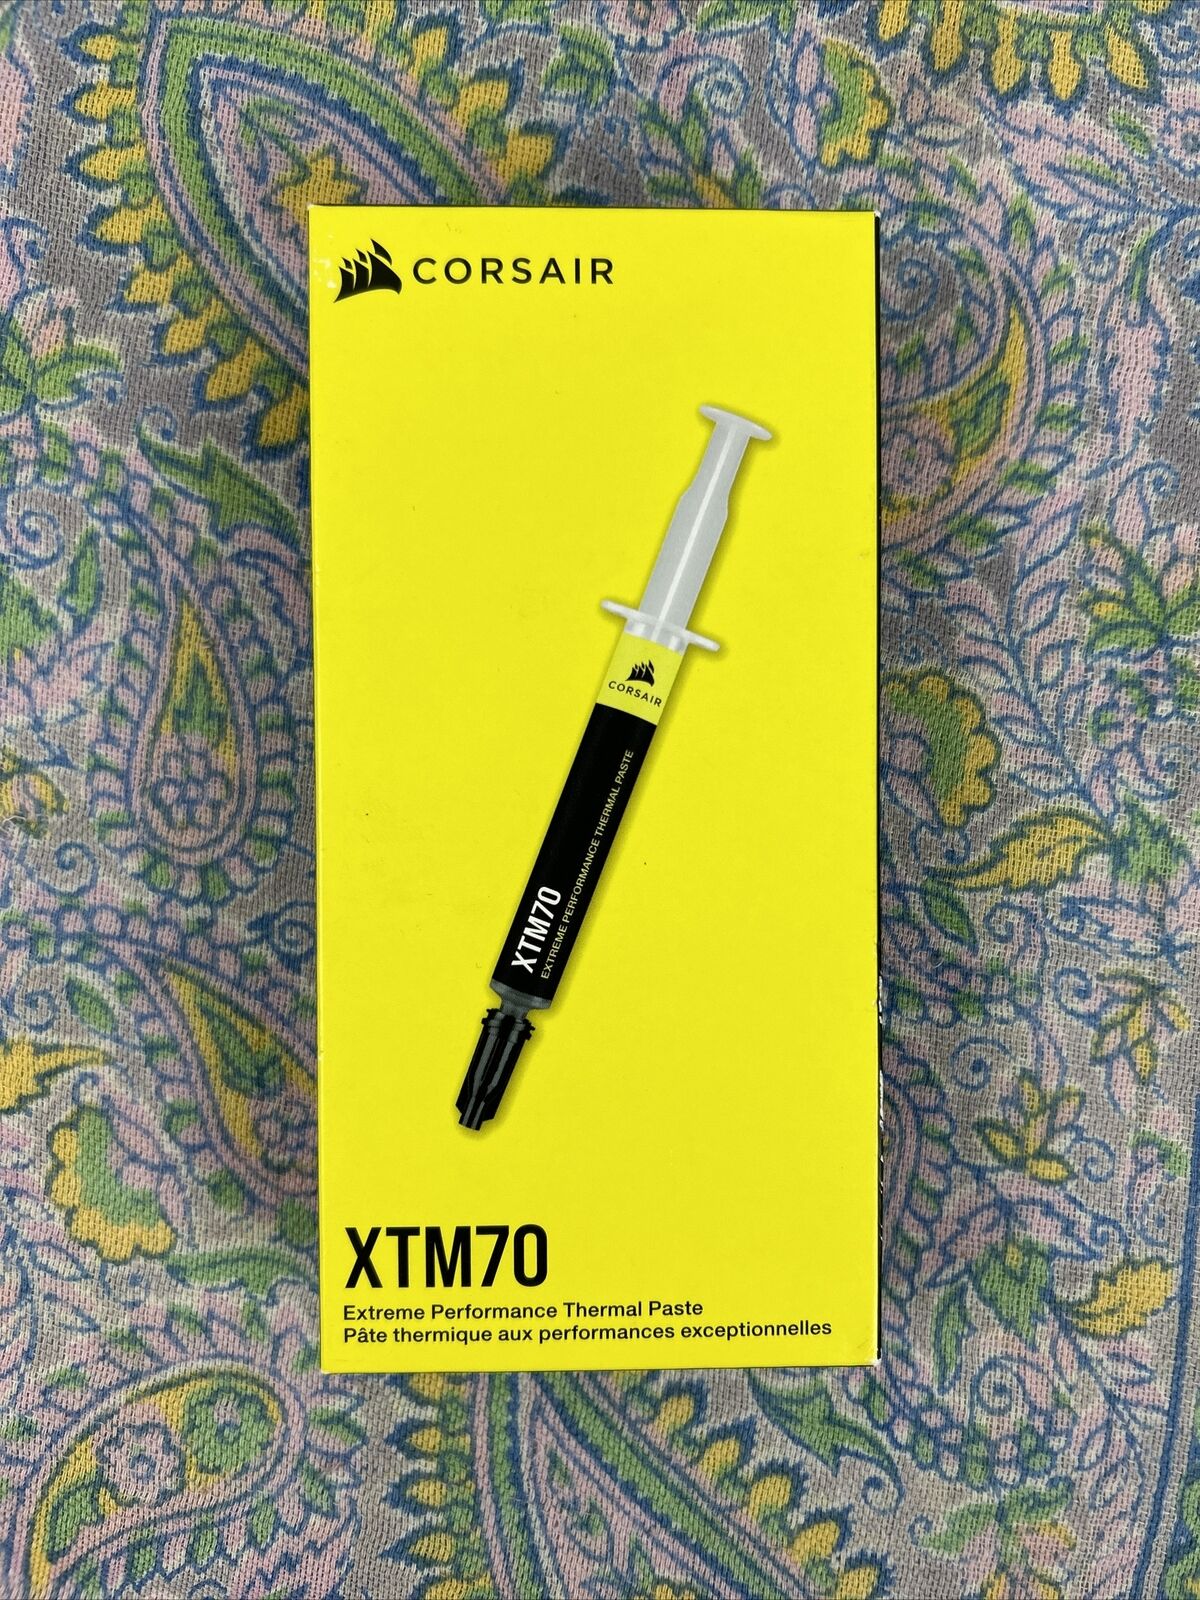 CORSAIR XTM70 Extreme Performance Thermal Paste, 3g